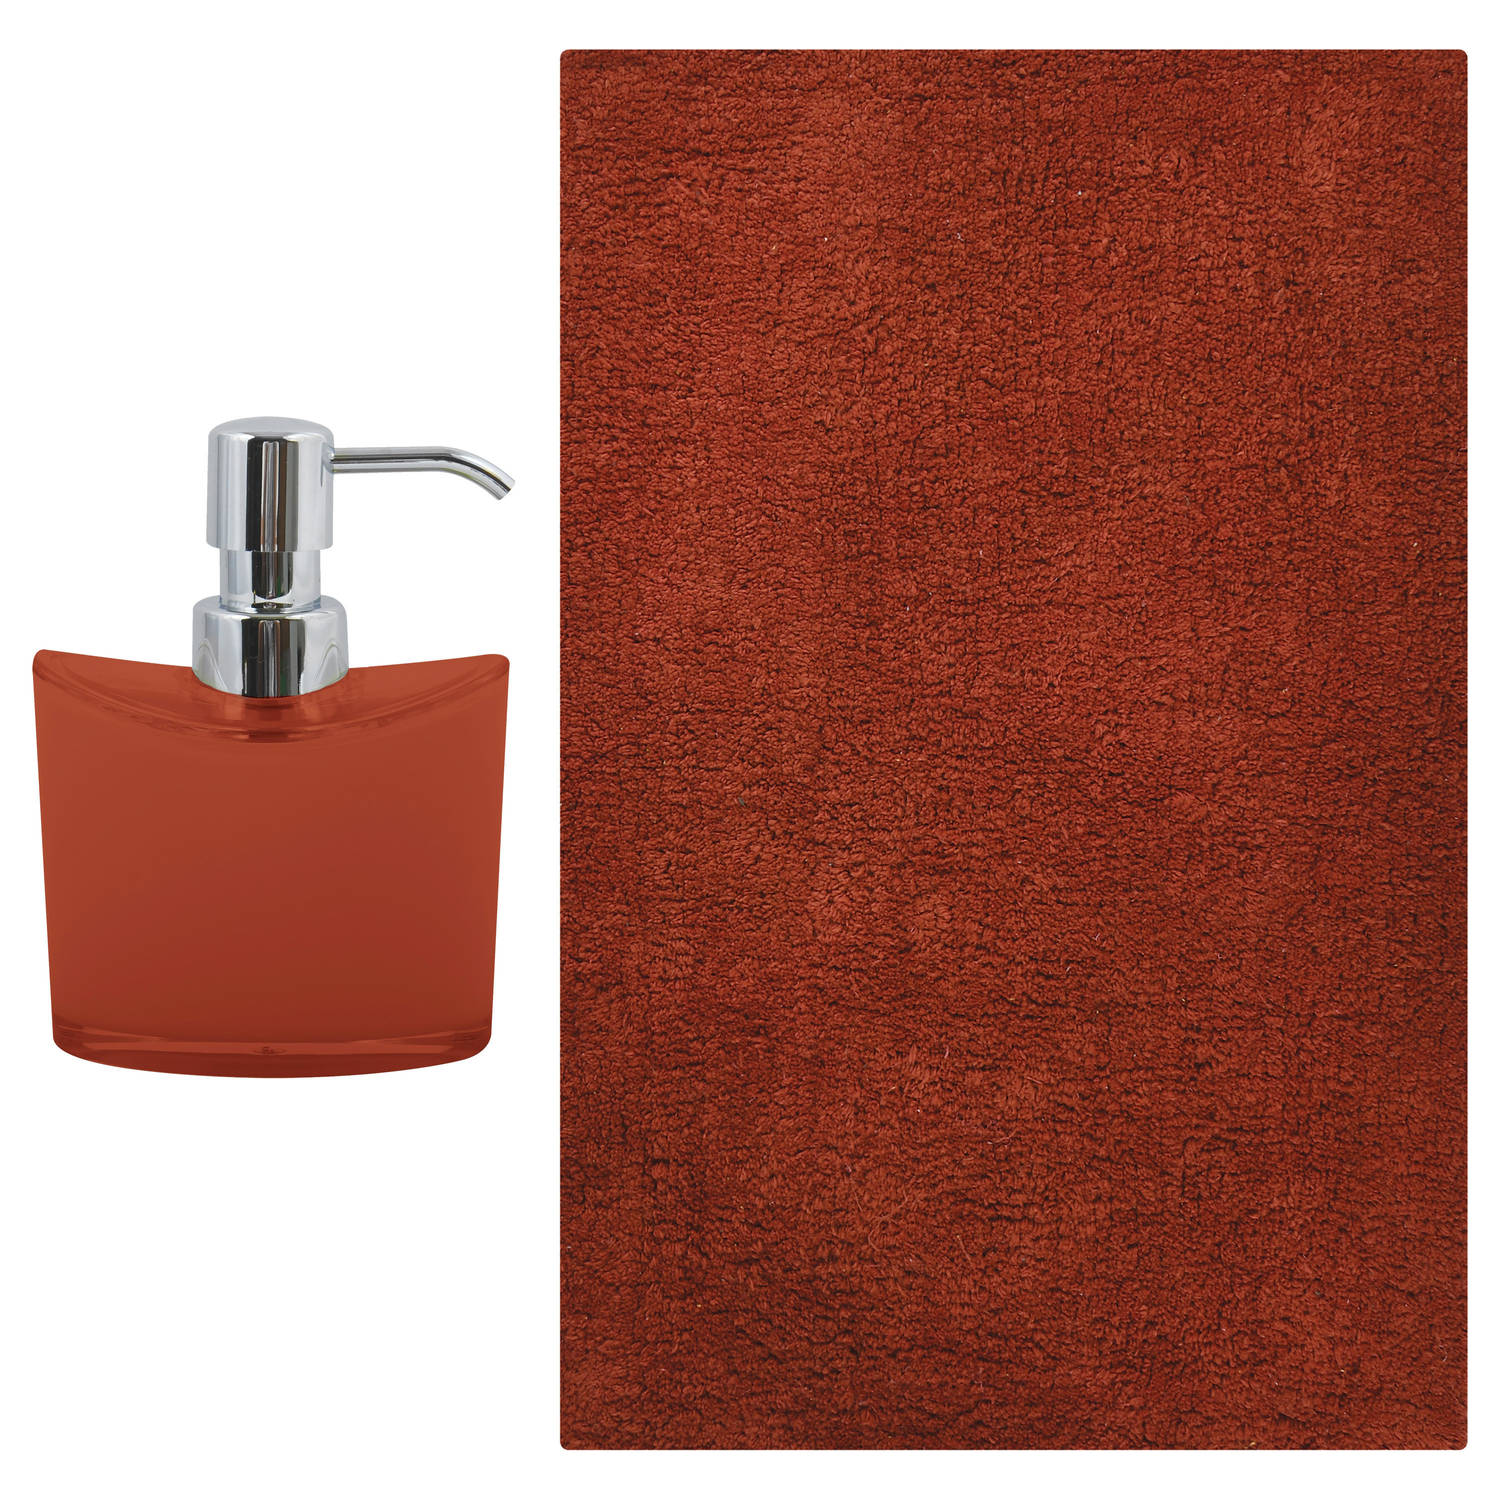 MSV badkamer droogloop mat-tapijt Sienna 40 x 60 cm bijpassende kleur zeeppompje terracotta Badmatje